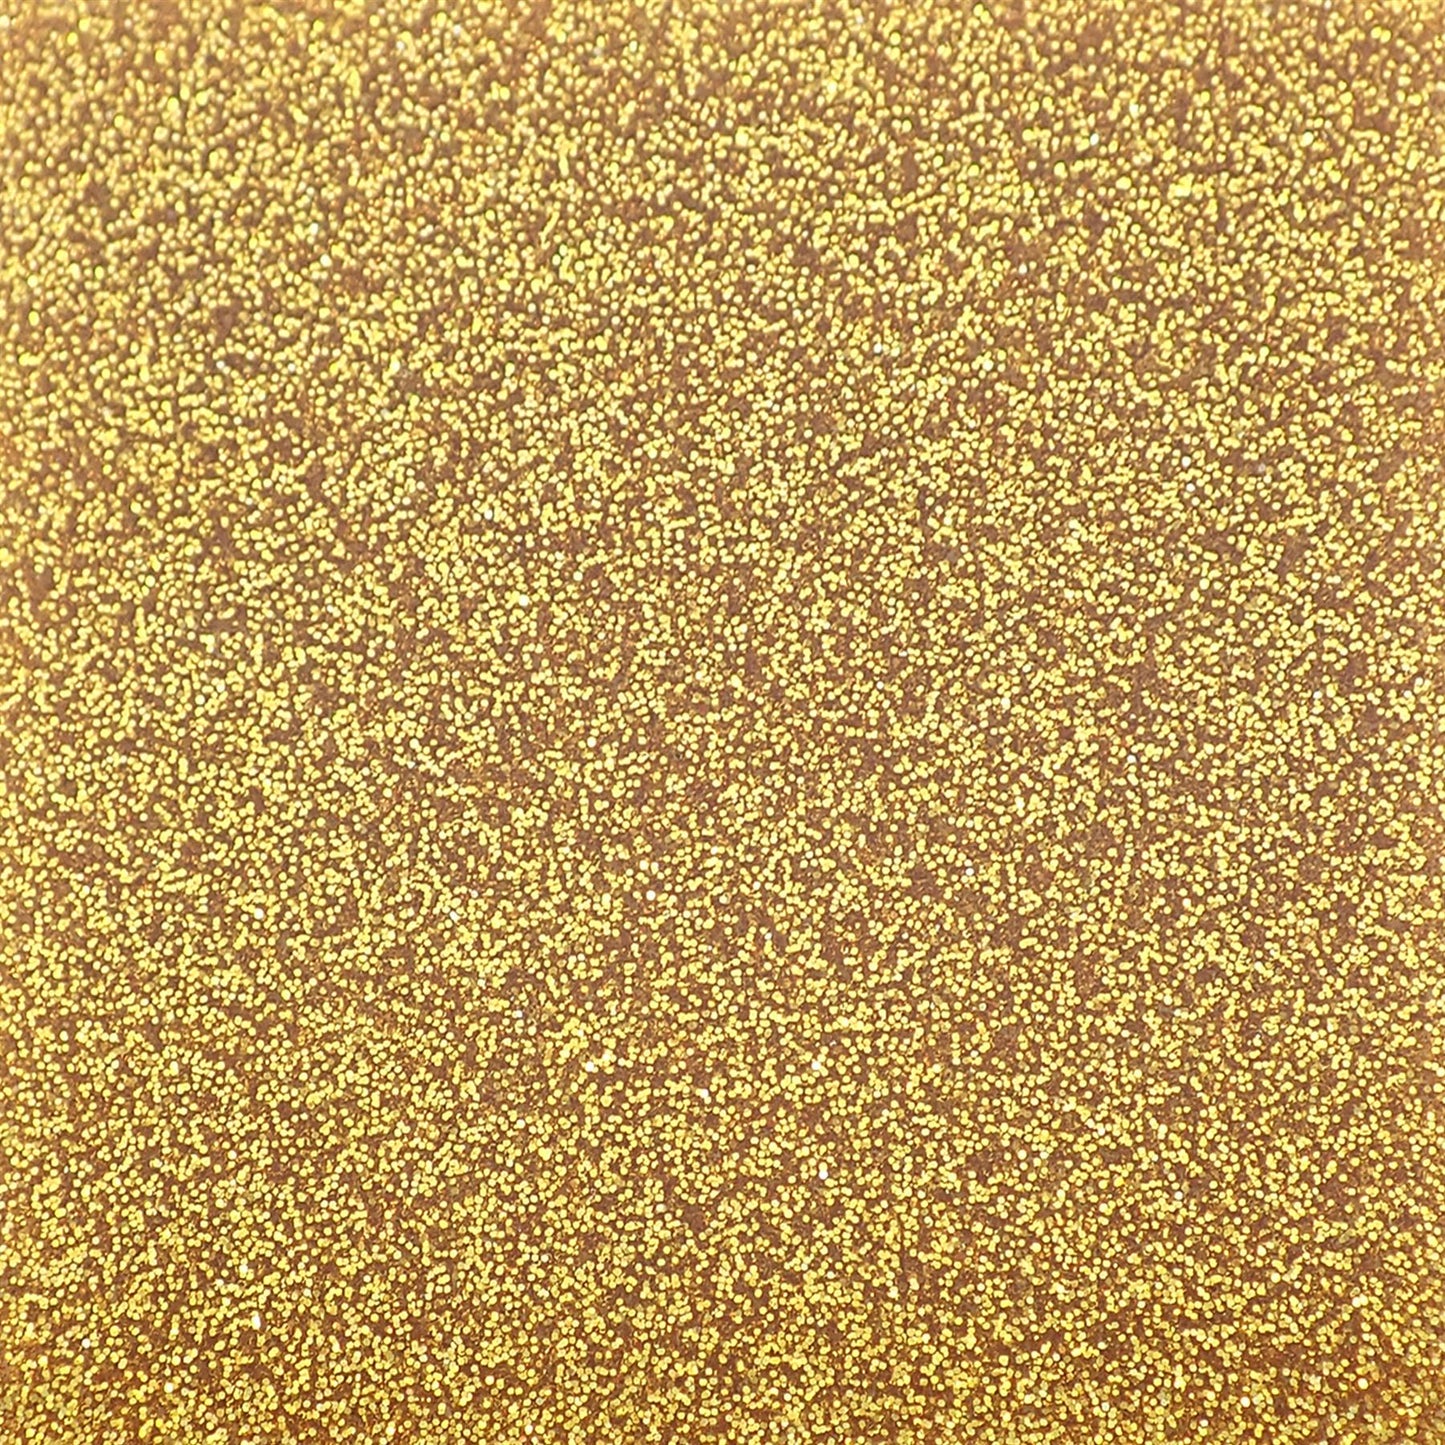 Incudo Aztec Gold Glitter Acrylic Sheet - 150x125x3mm